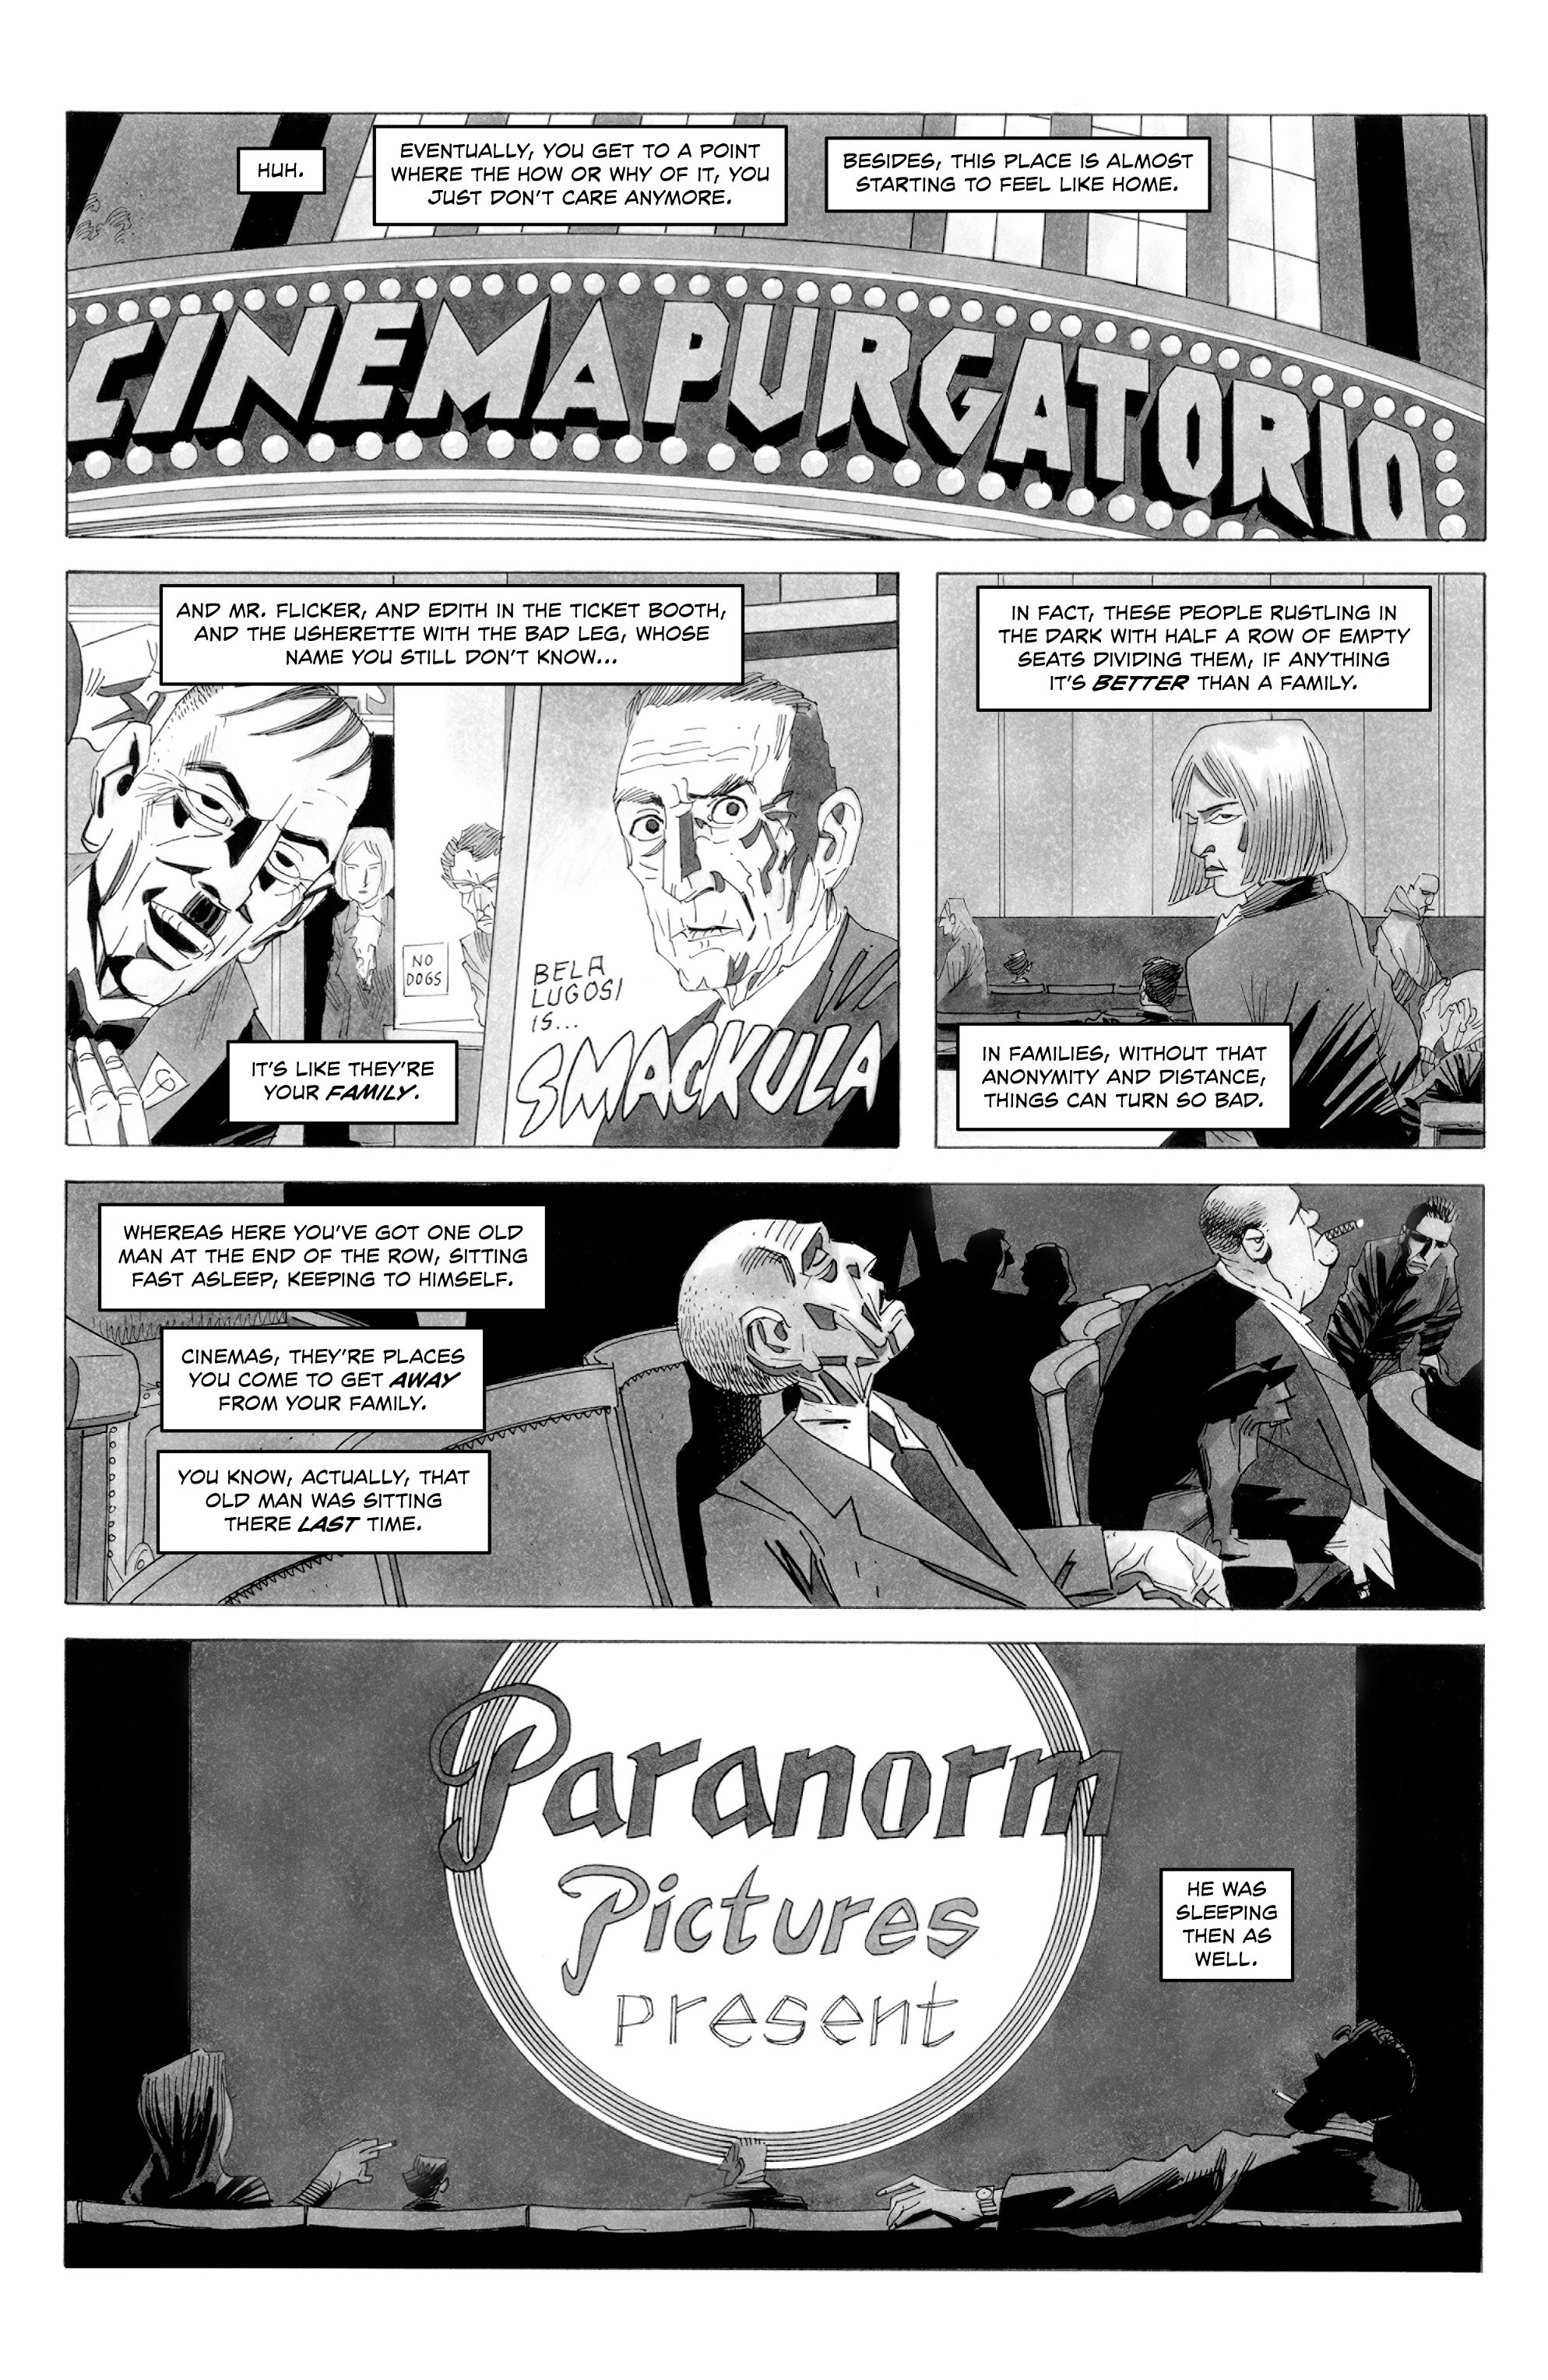 Cinema Purgatorio (2016-): Chapter 7 - Page 5